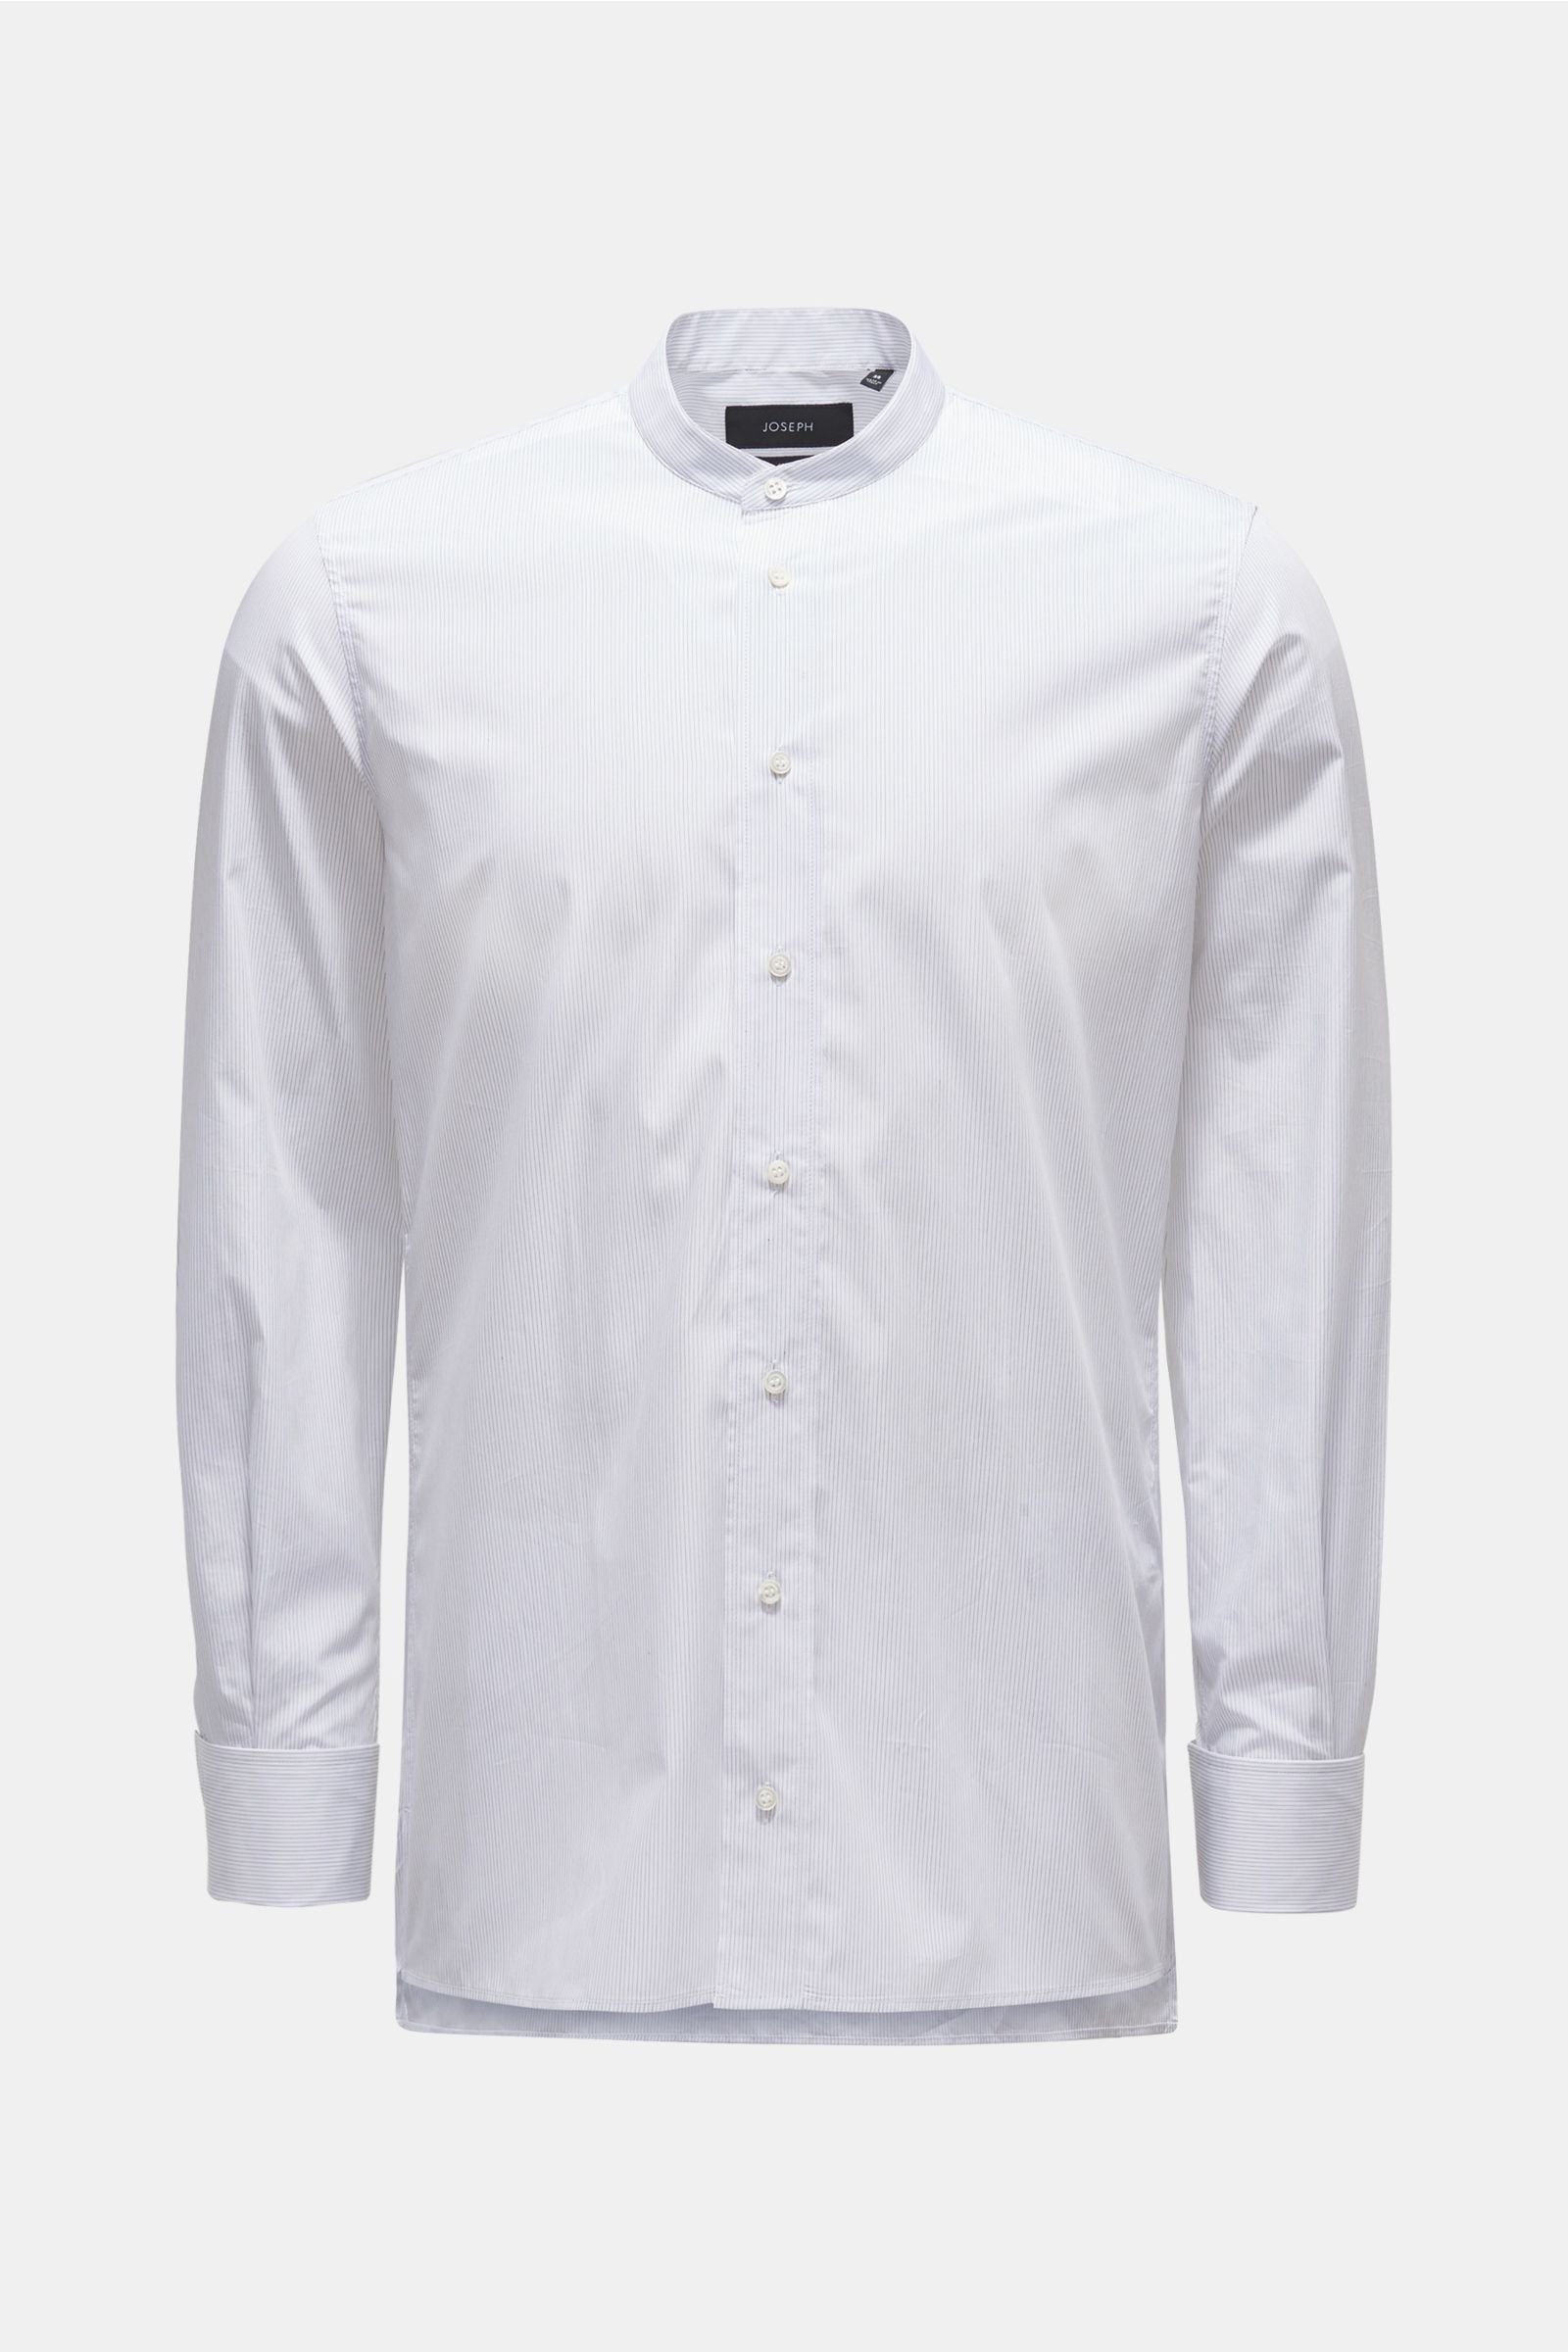 Casual shirt grandad collar white/black striped